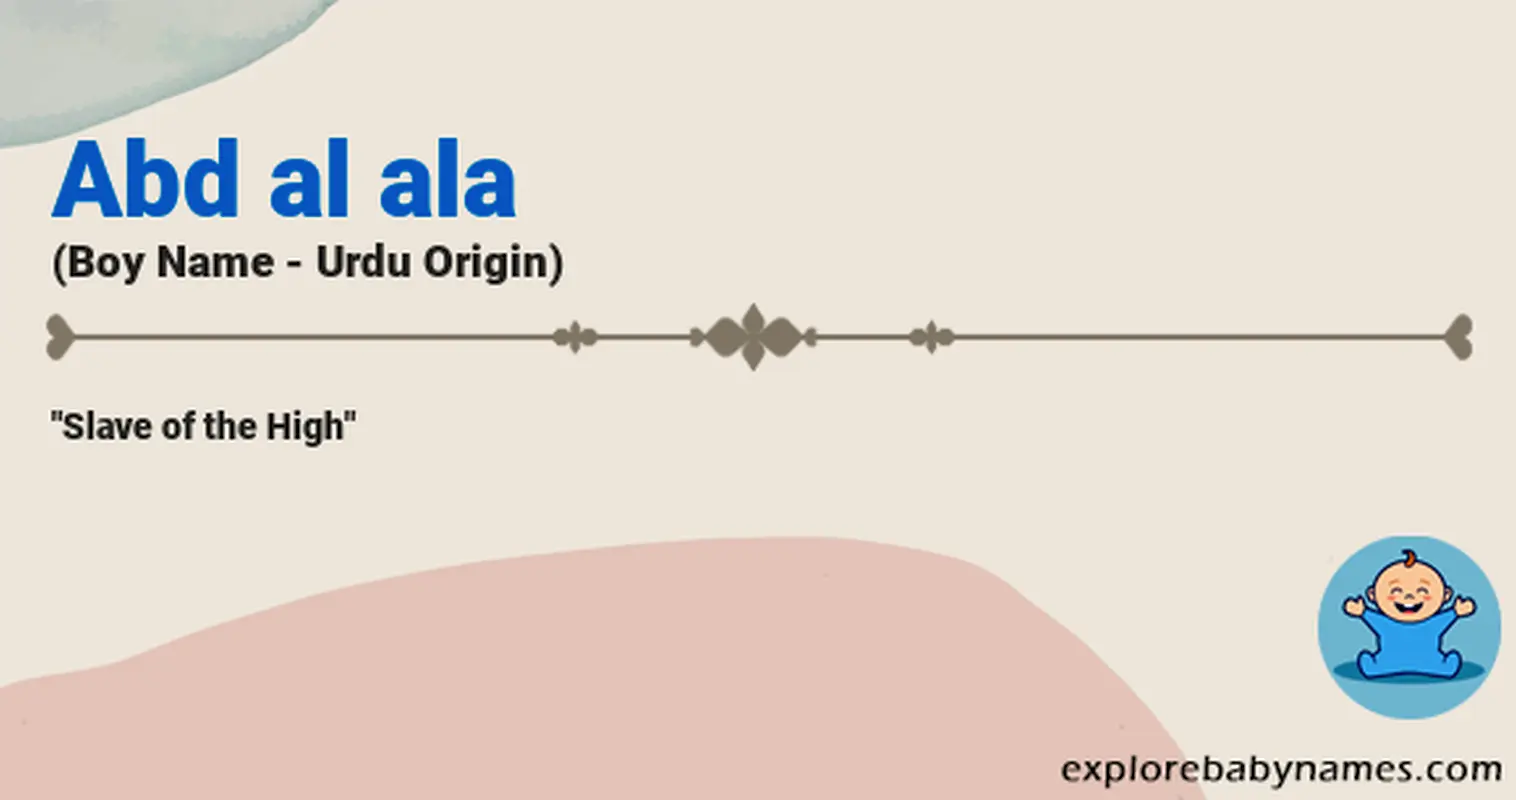 Meaning of Abd al ala